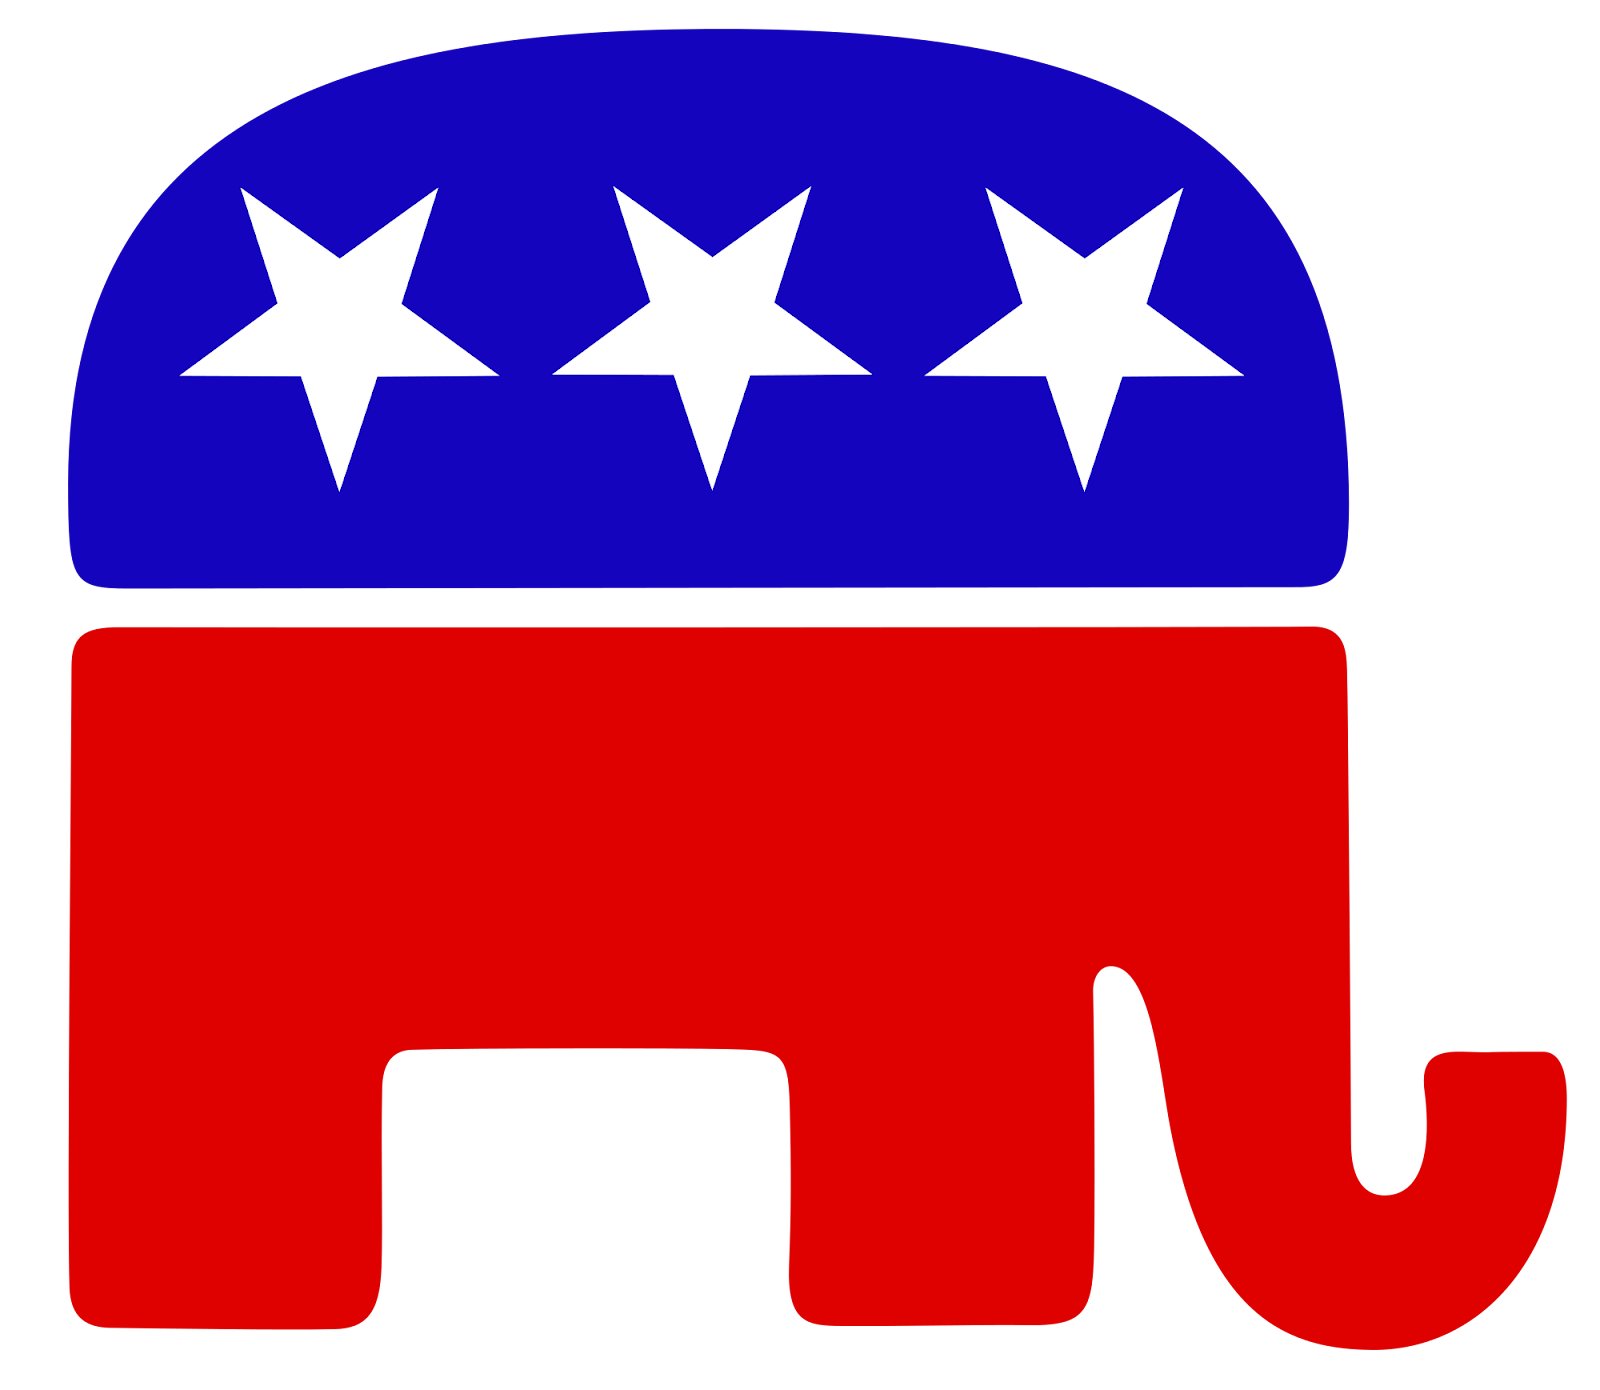 https://upload.wikimedia.org/wikipedia/commons/thumb/9/9b/Republicanlogo.svg/2000px-Republicanlogo.svg.png